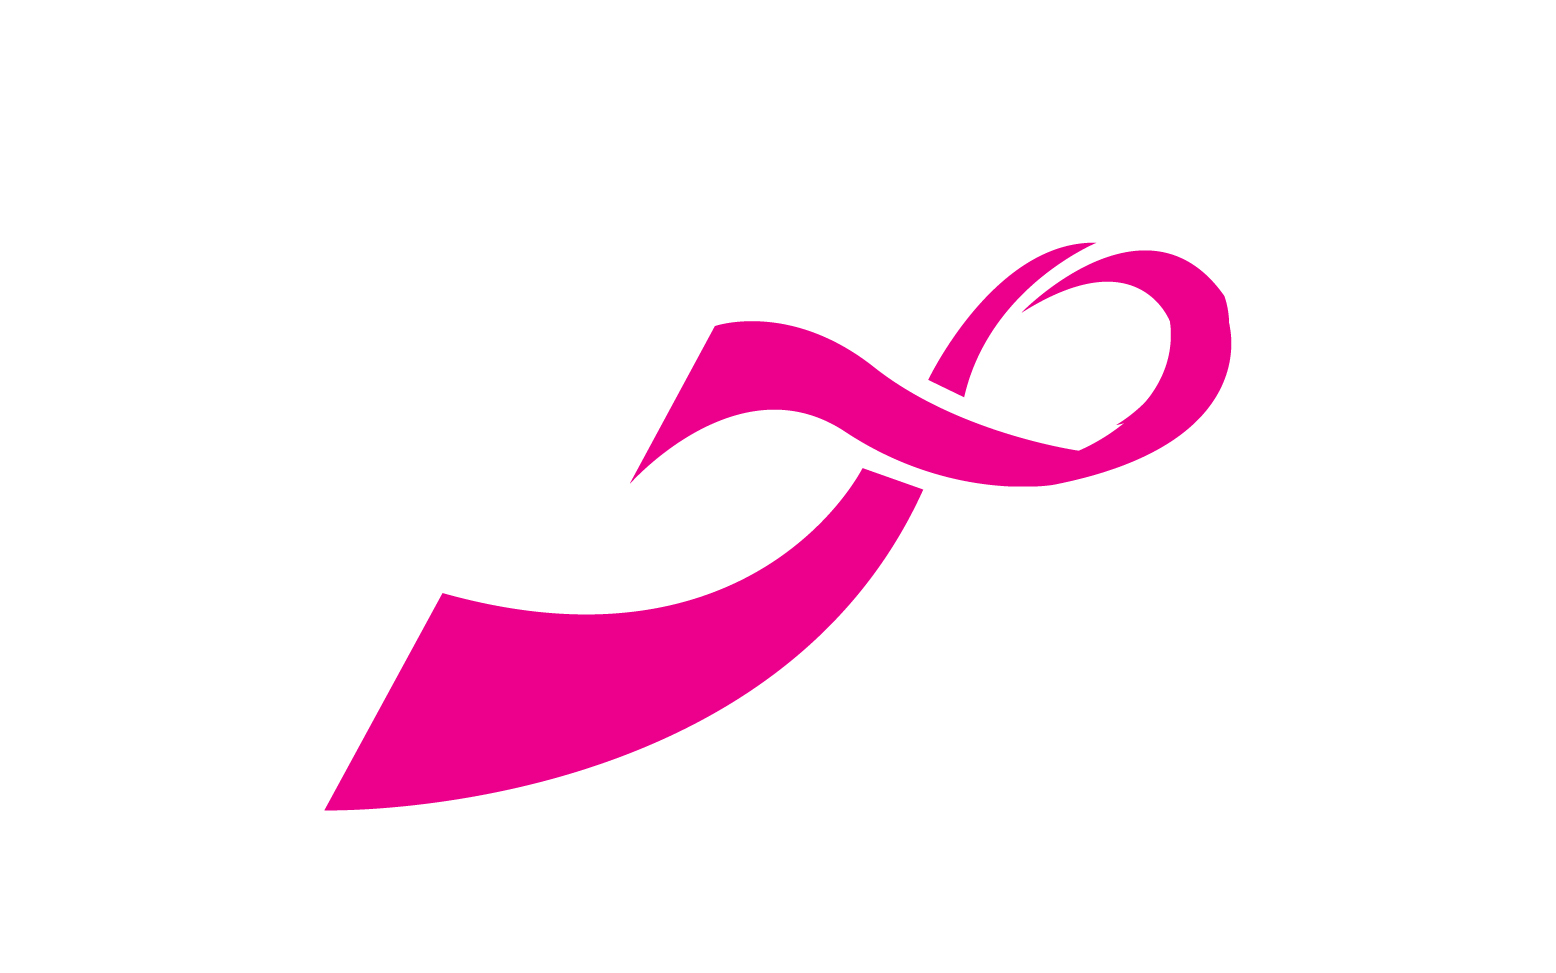 Ribbon pink icon logo element version v44